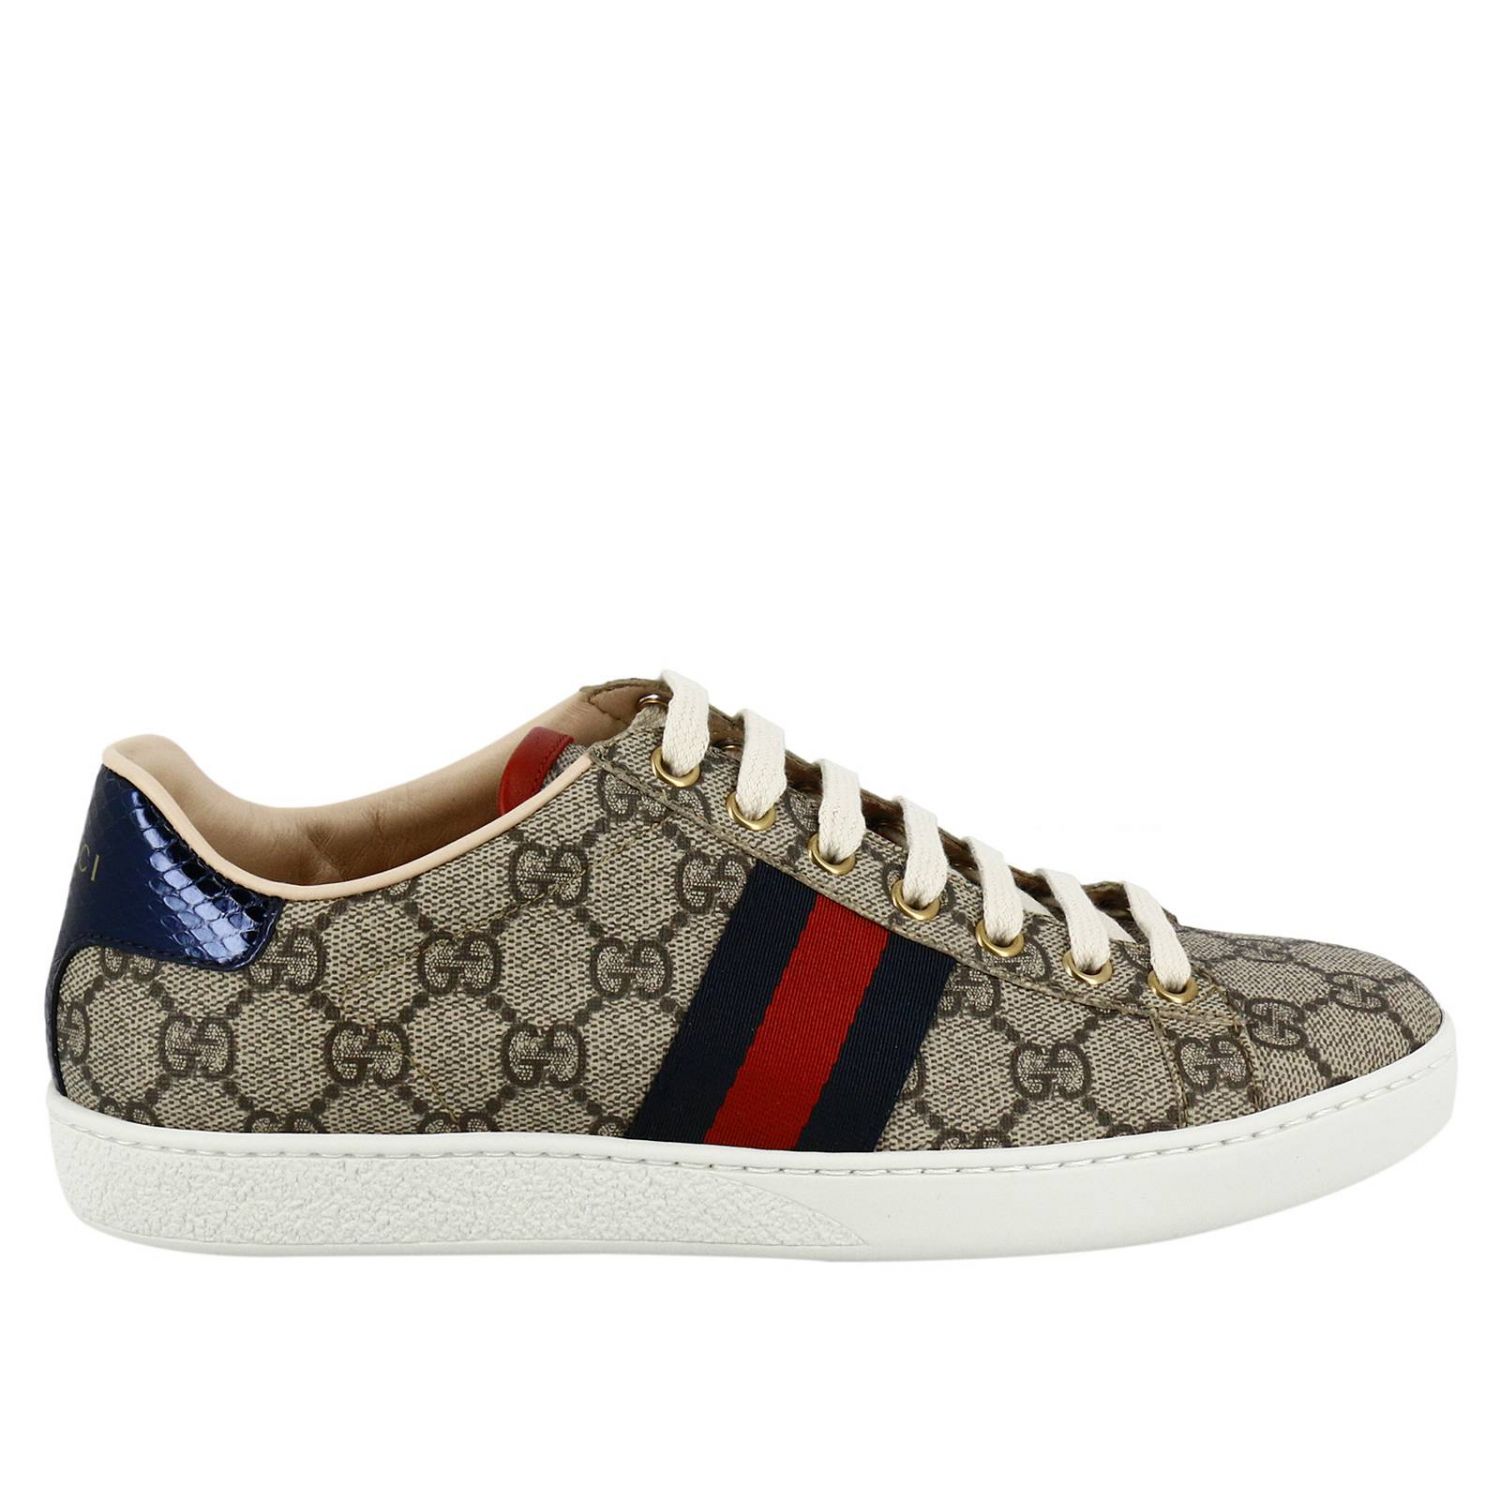 GUCCI: Shoes women | Sneakers Gucci Women Beige | Sneakers Gucci 499410 ...